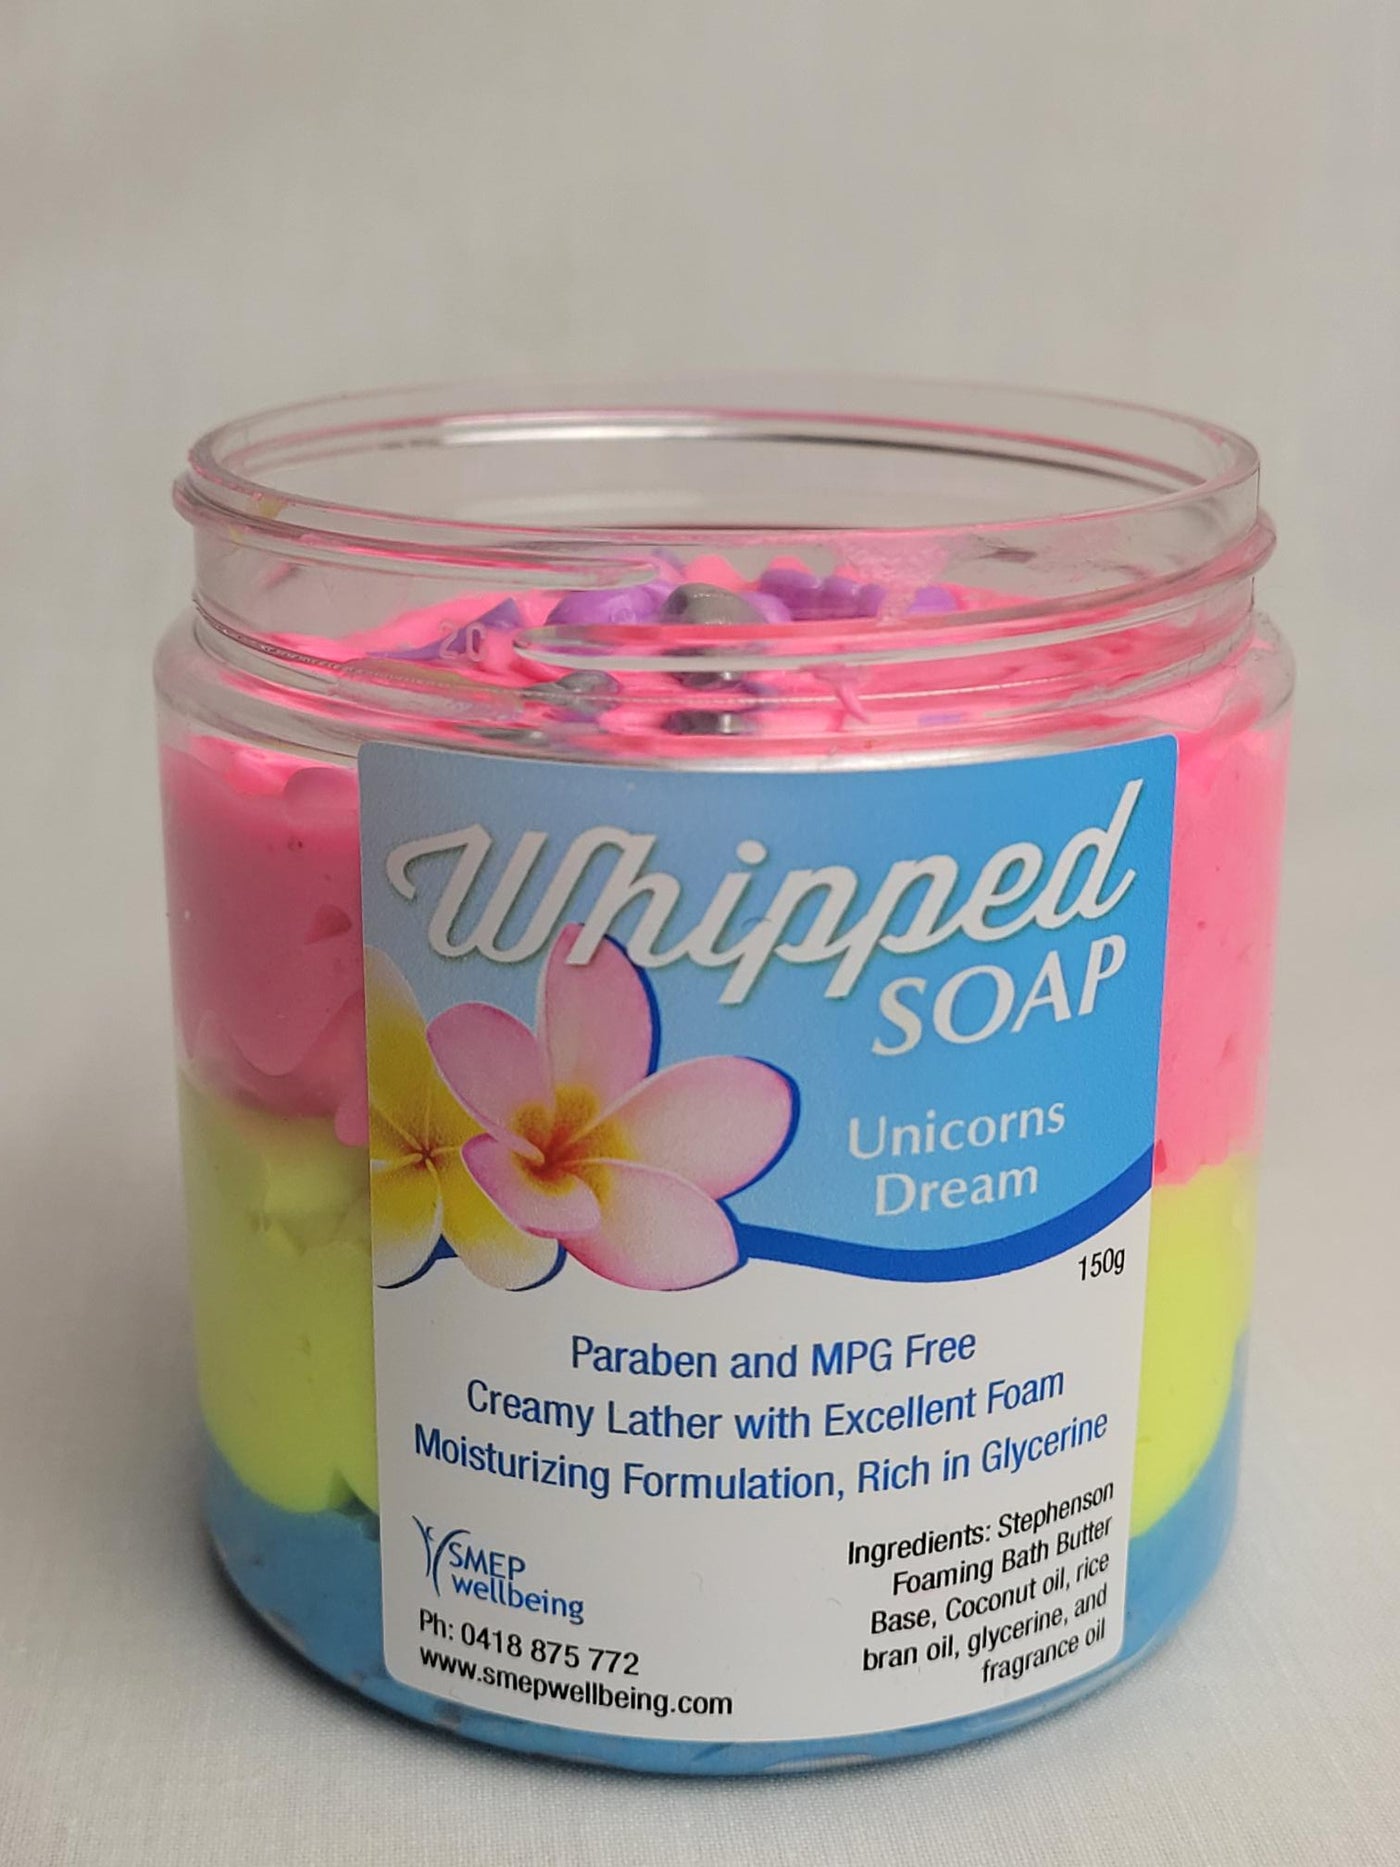 Unicorns Dream - Whipped Soap